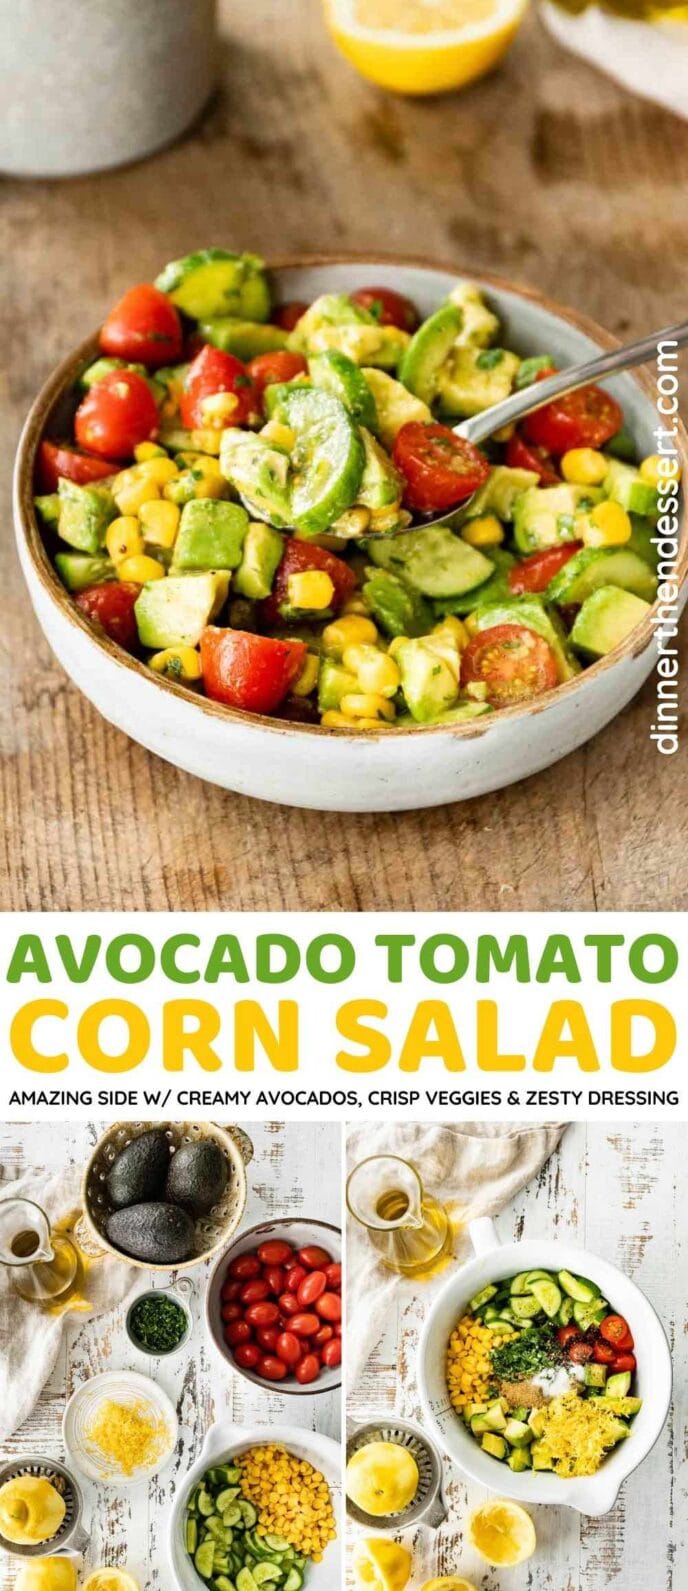 Avocado Tomato Corn Salad collage